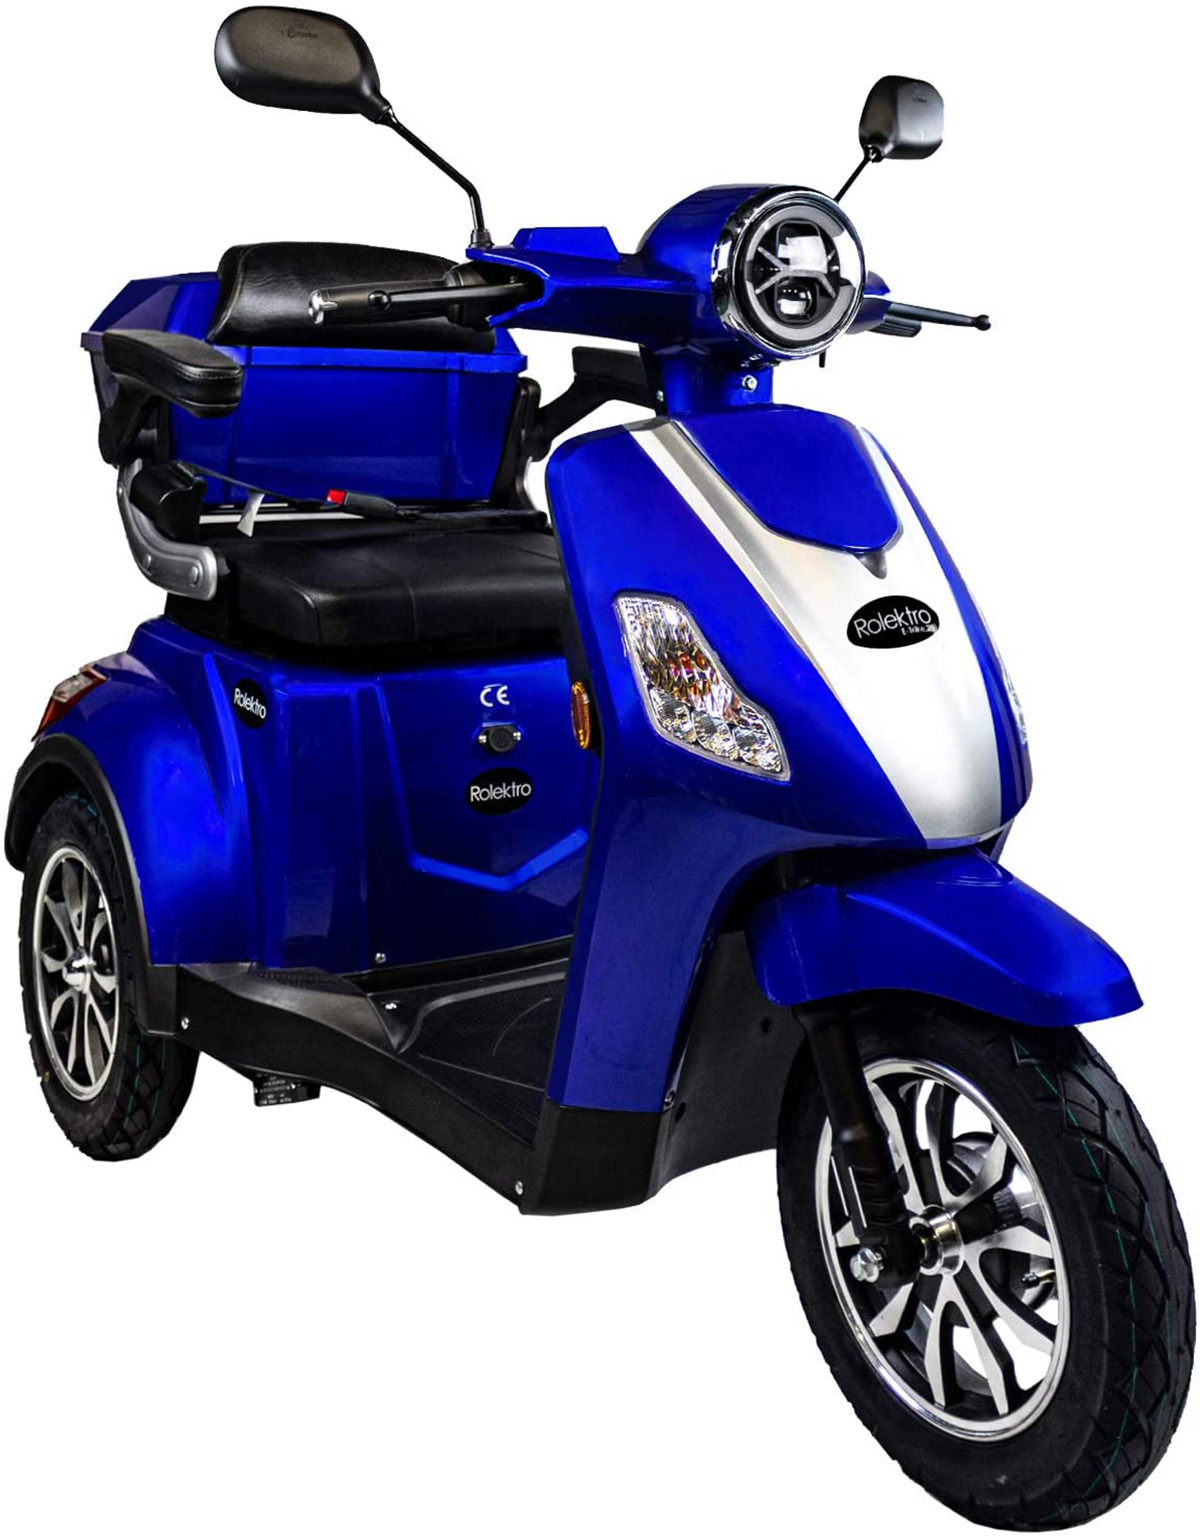 ROLEKTRO E-Trike Unisex-Rad, E-Scooter Lithium (Laufradgröße: Zoll, 25 15,7 V.3 Seniorenmobil Blau)